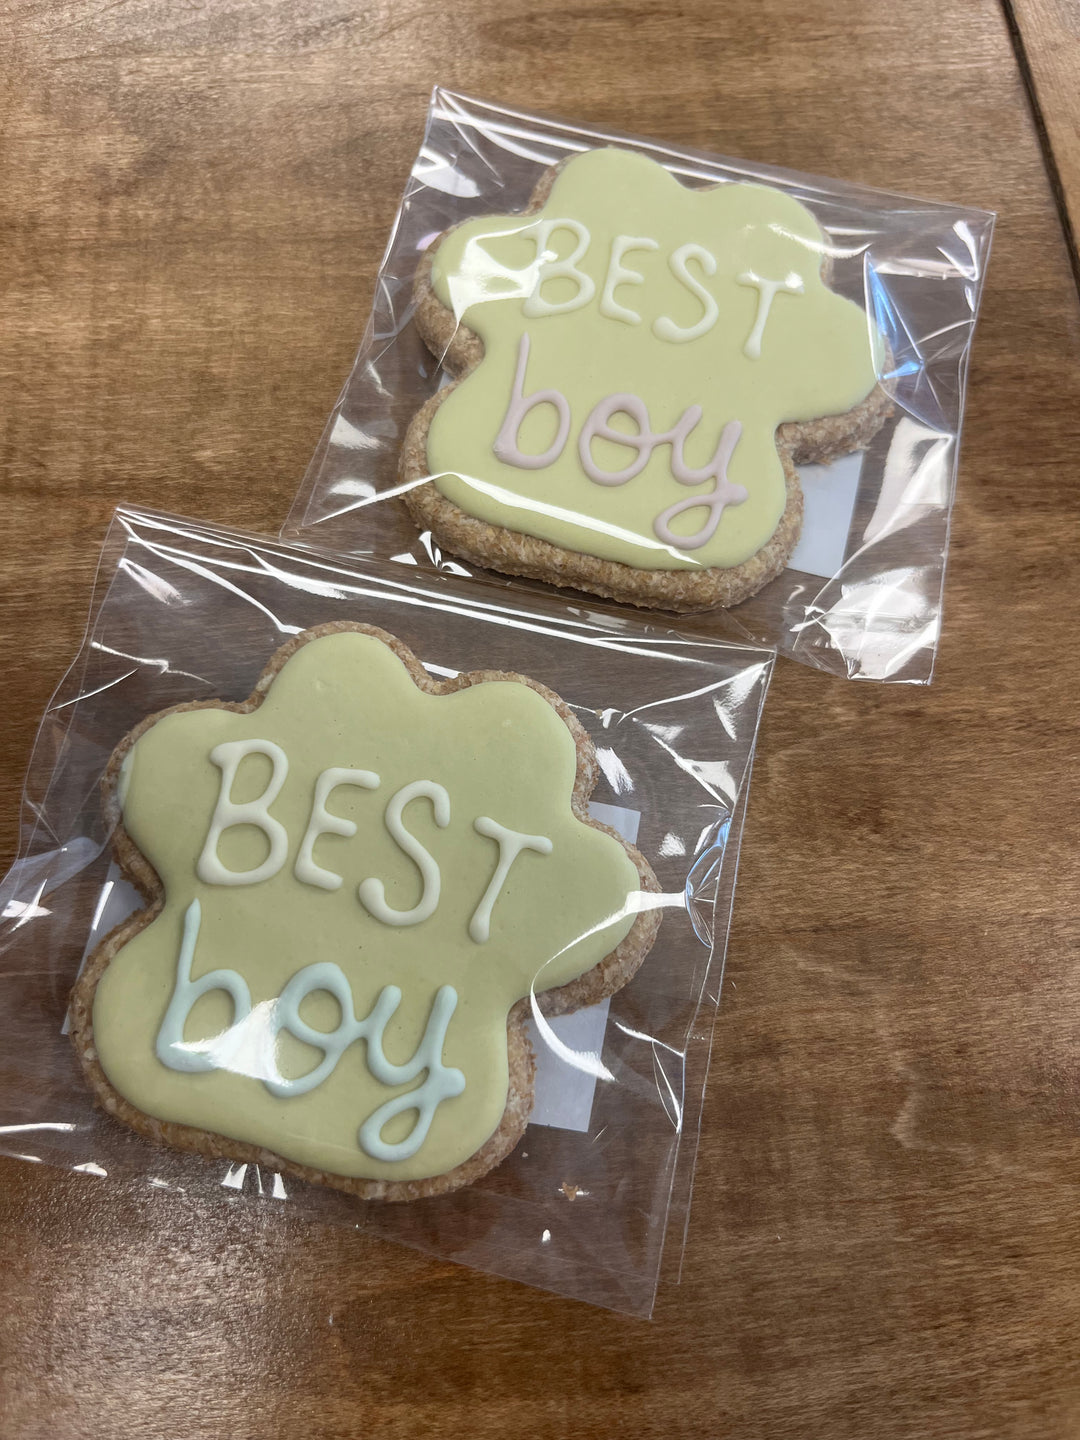 Bakery Table - Best Boy Cookie